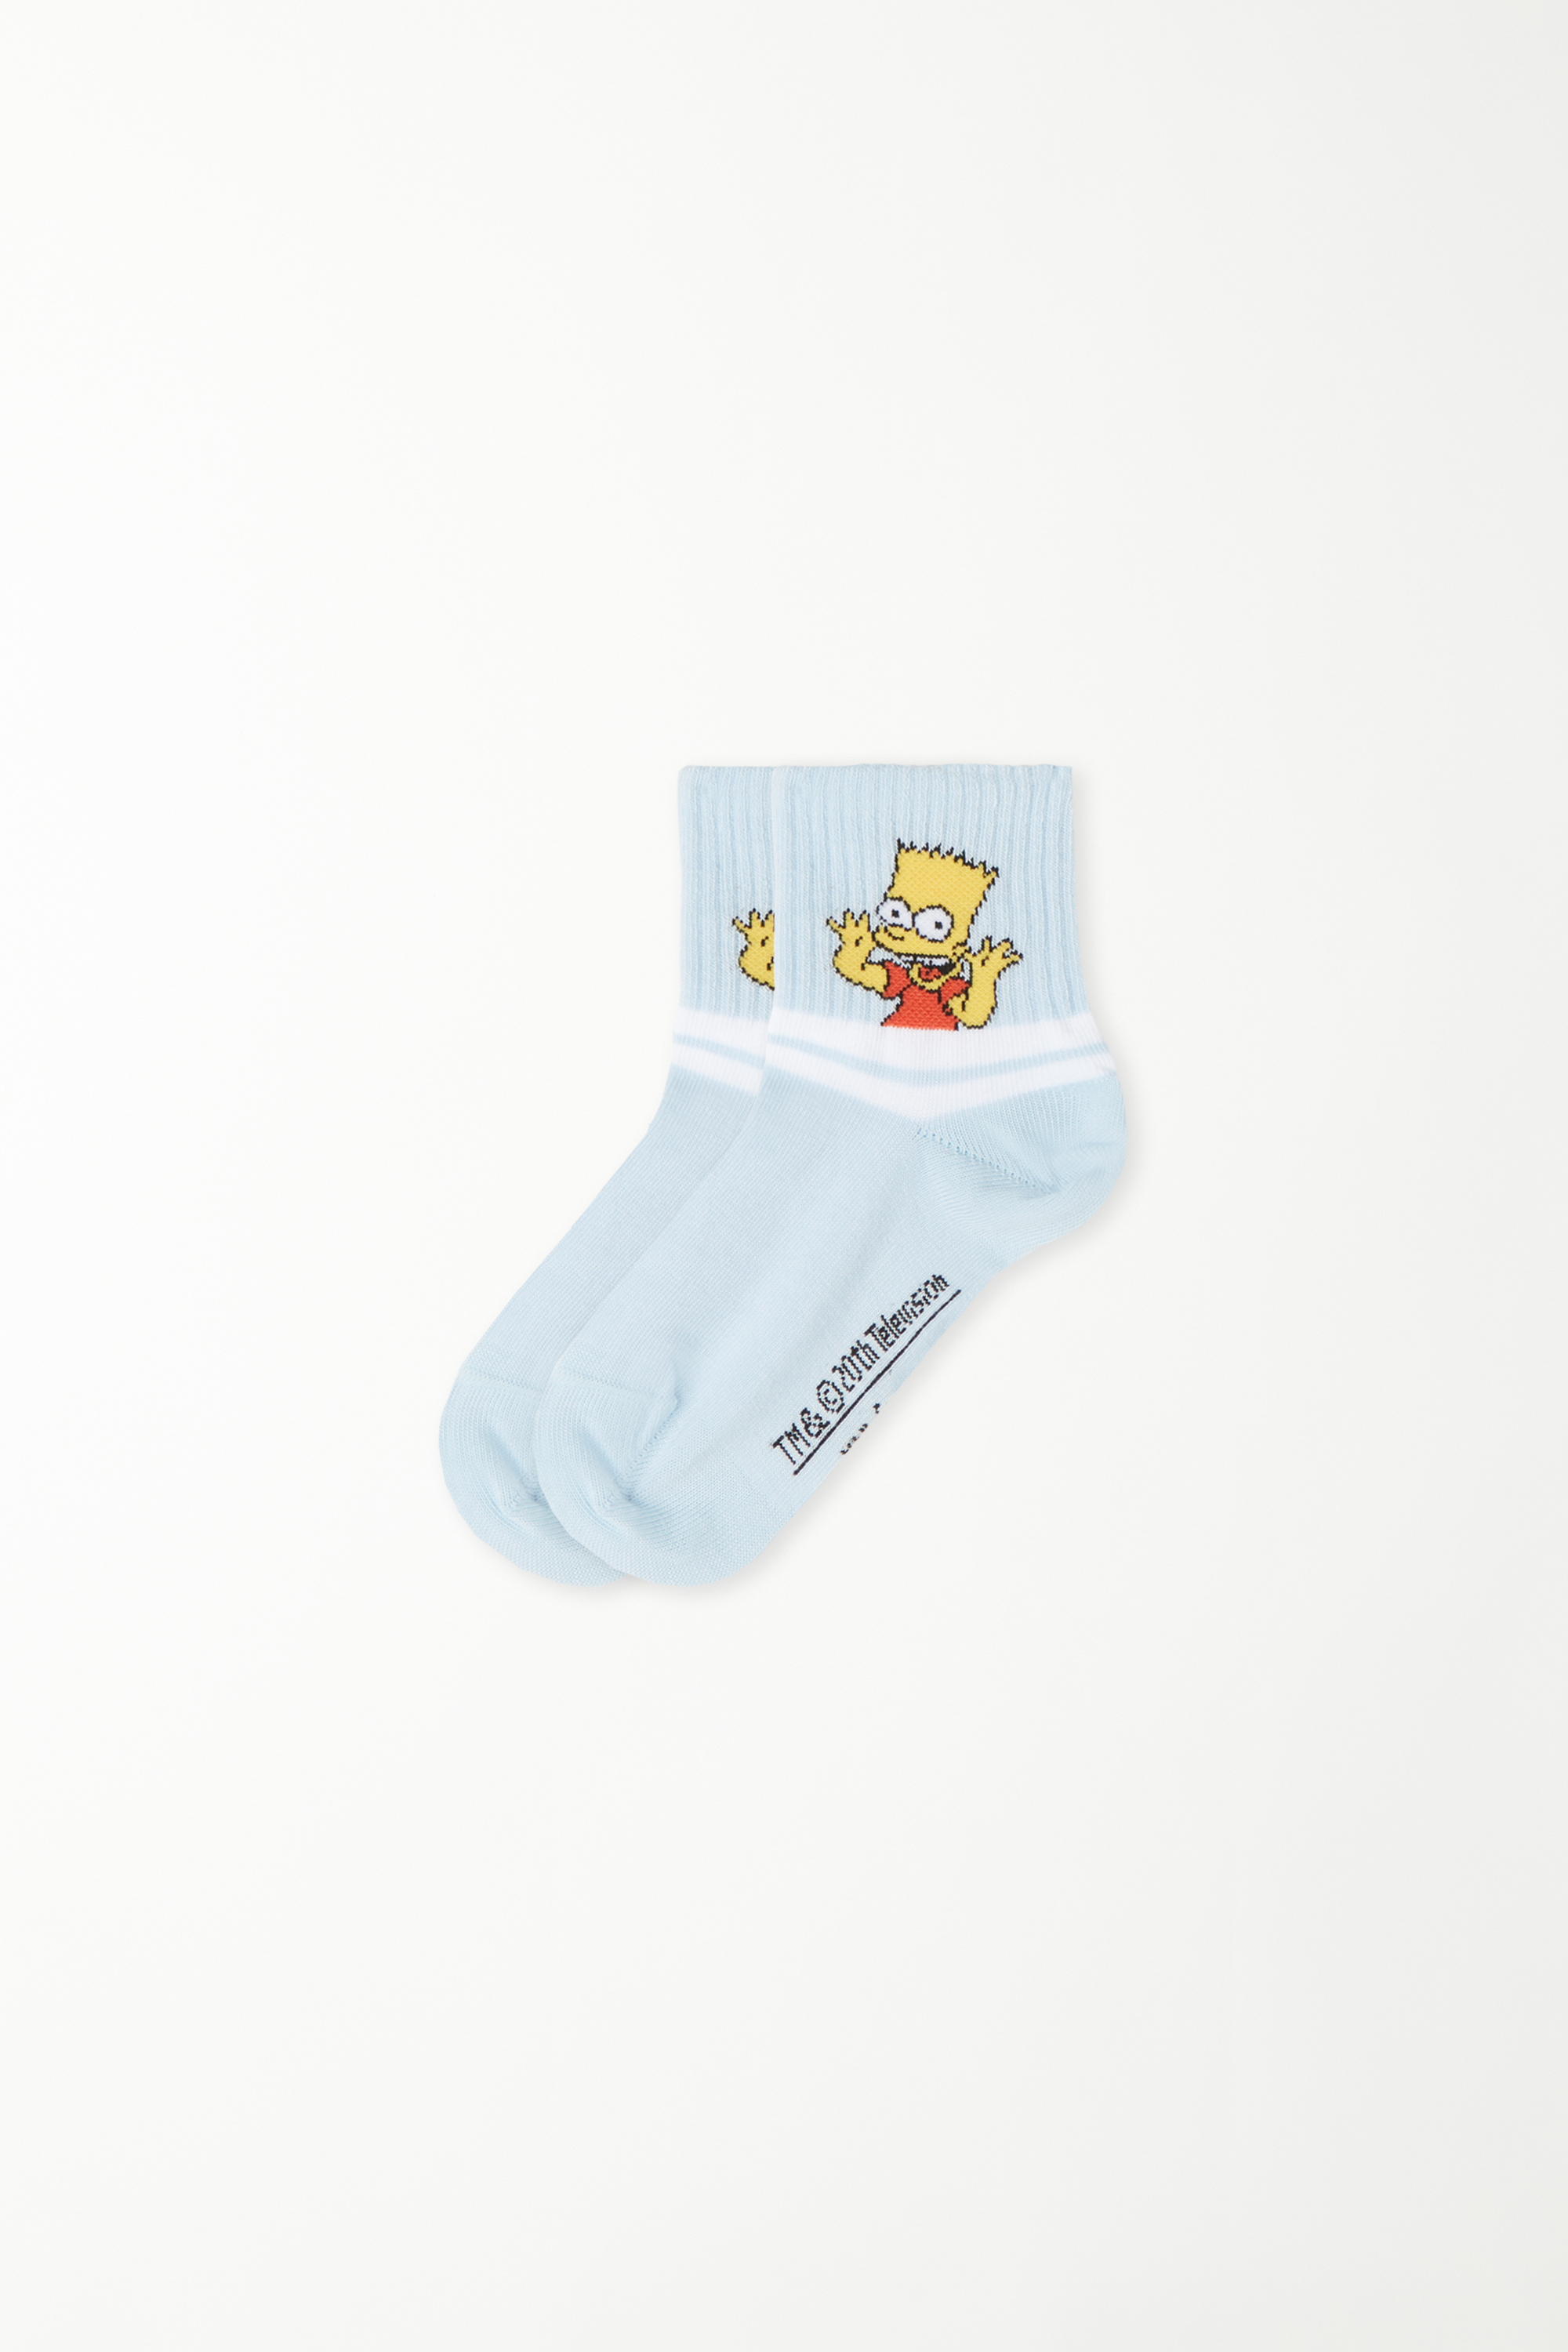 Boys’ Short Socks with The Simpsons Print